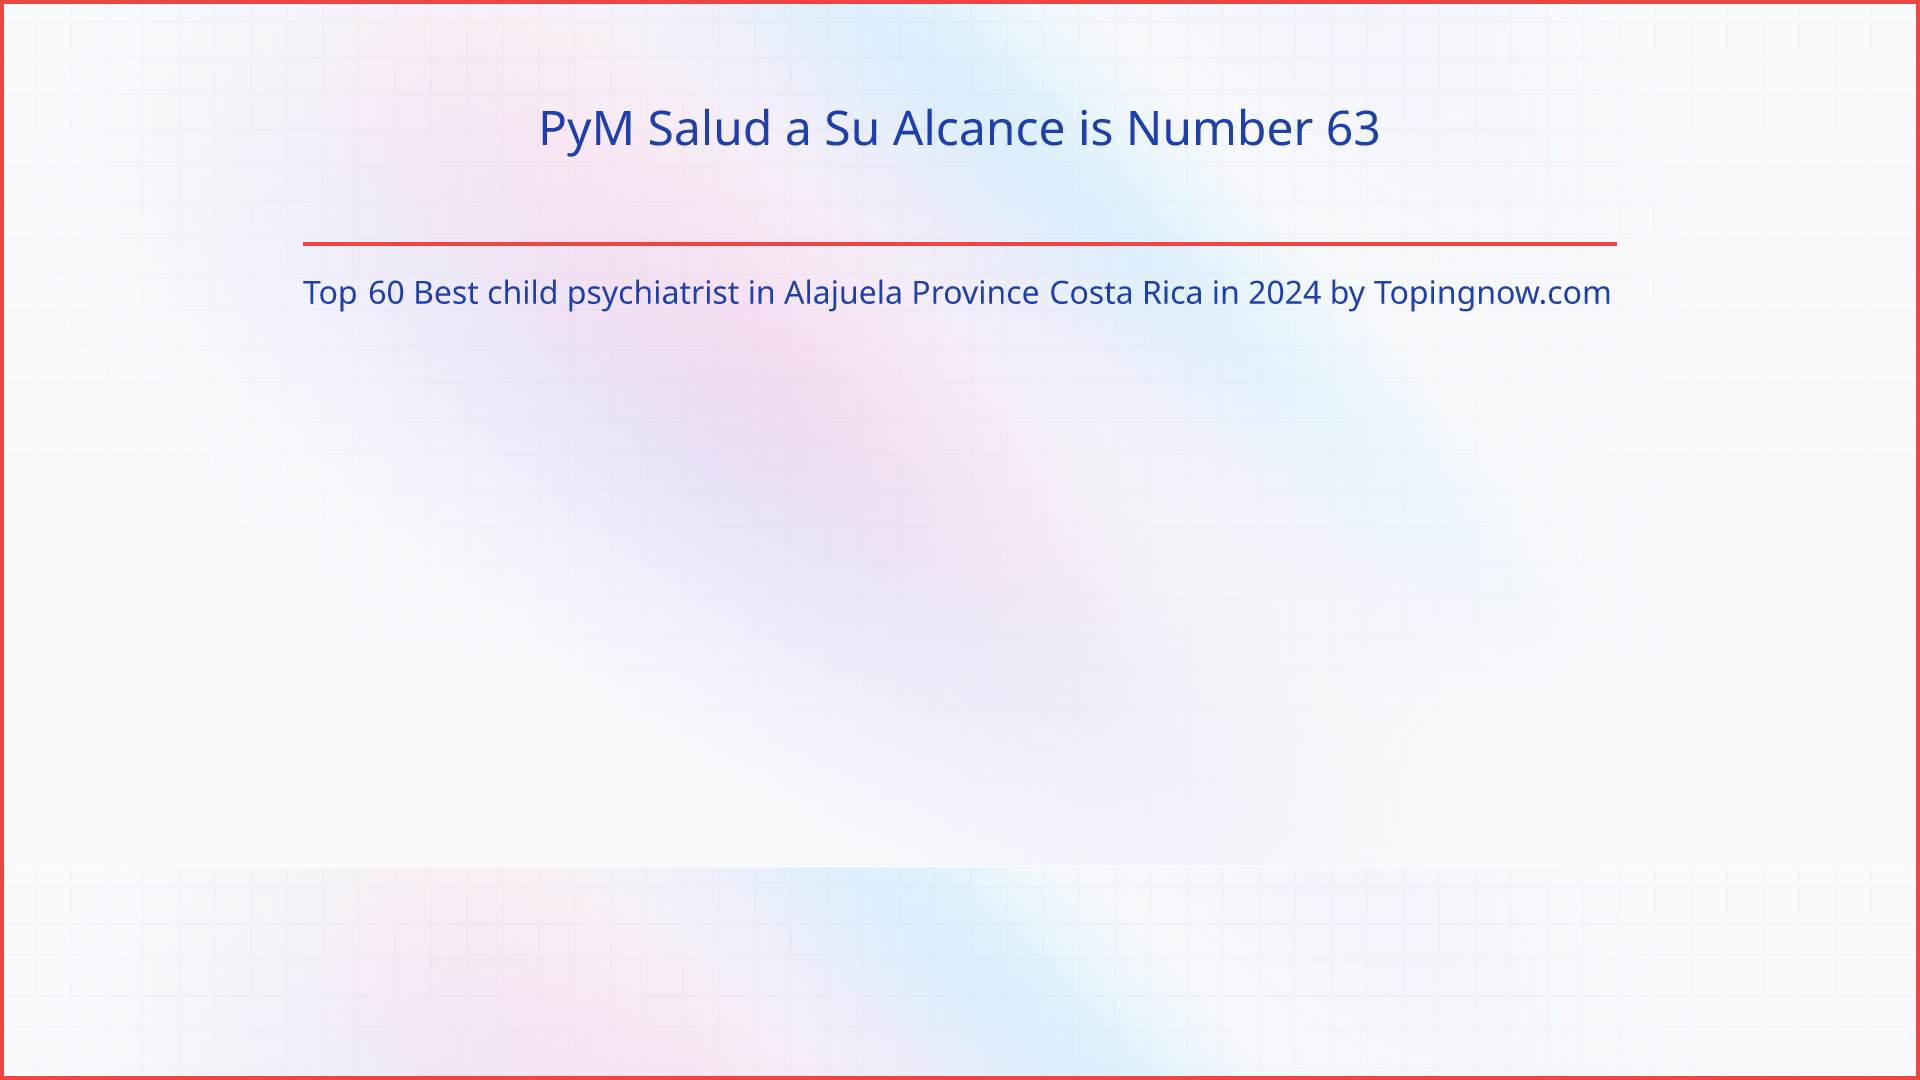 PyM Salud a Su Alcance: Top 60 Best child psychiatrist in Alajuela Province Costa Rica in 2024